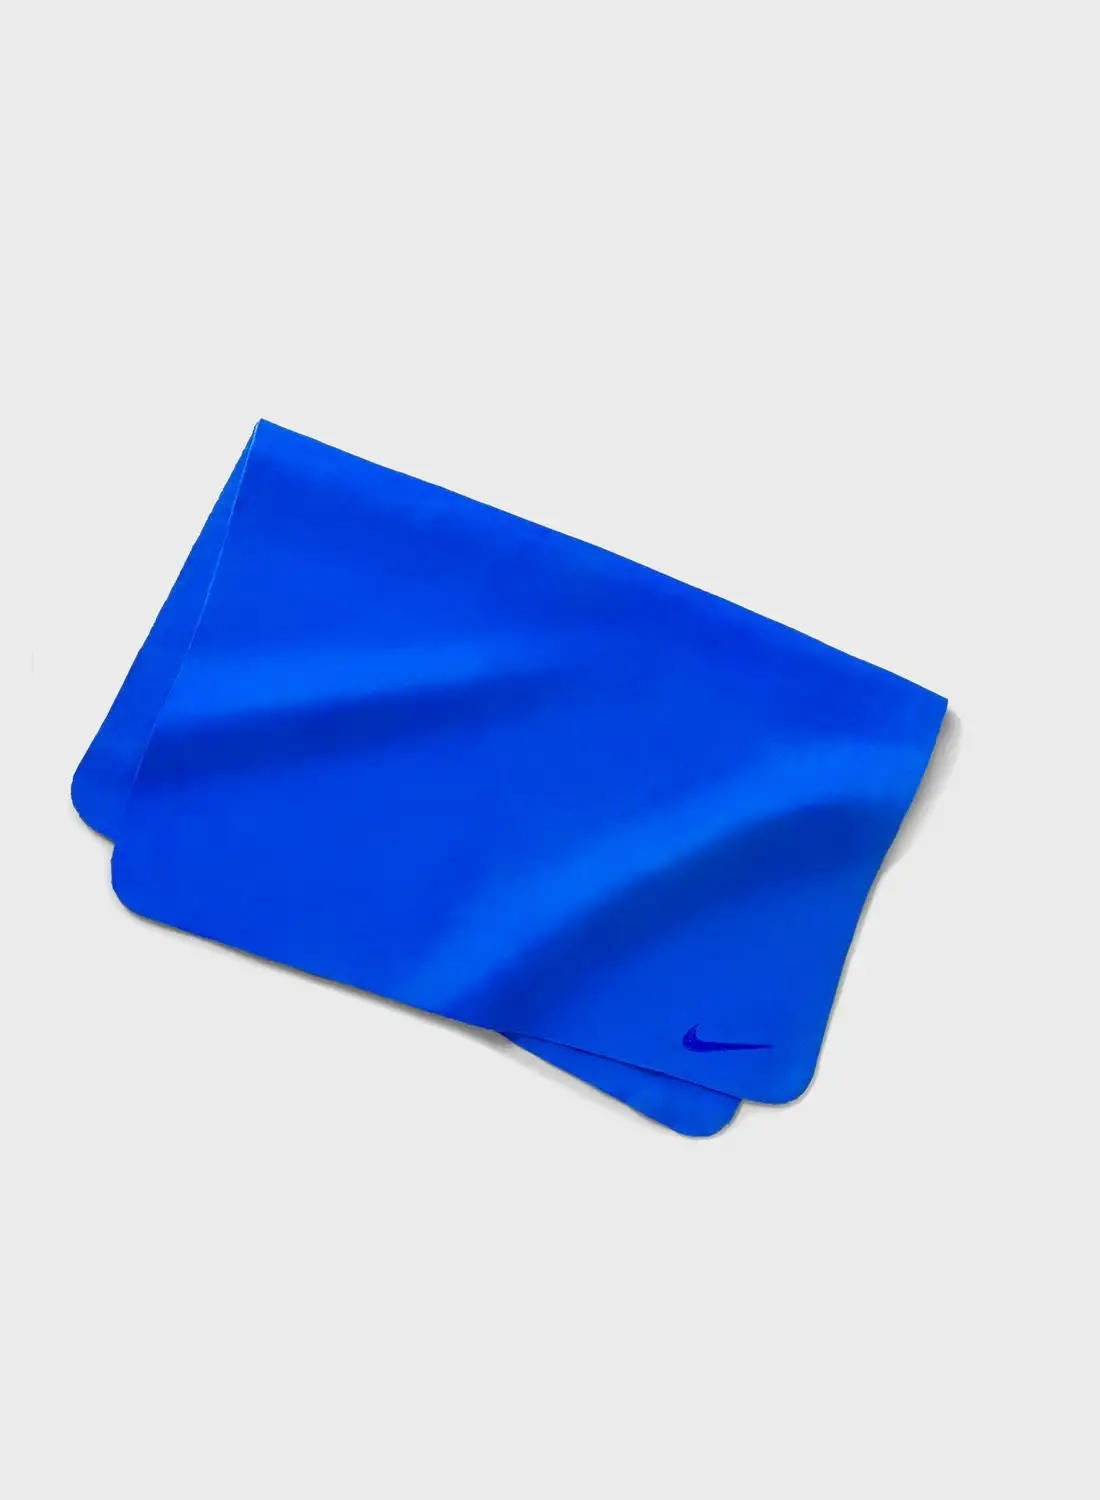 Nike Hydro Towel